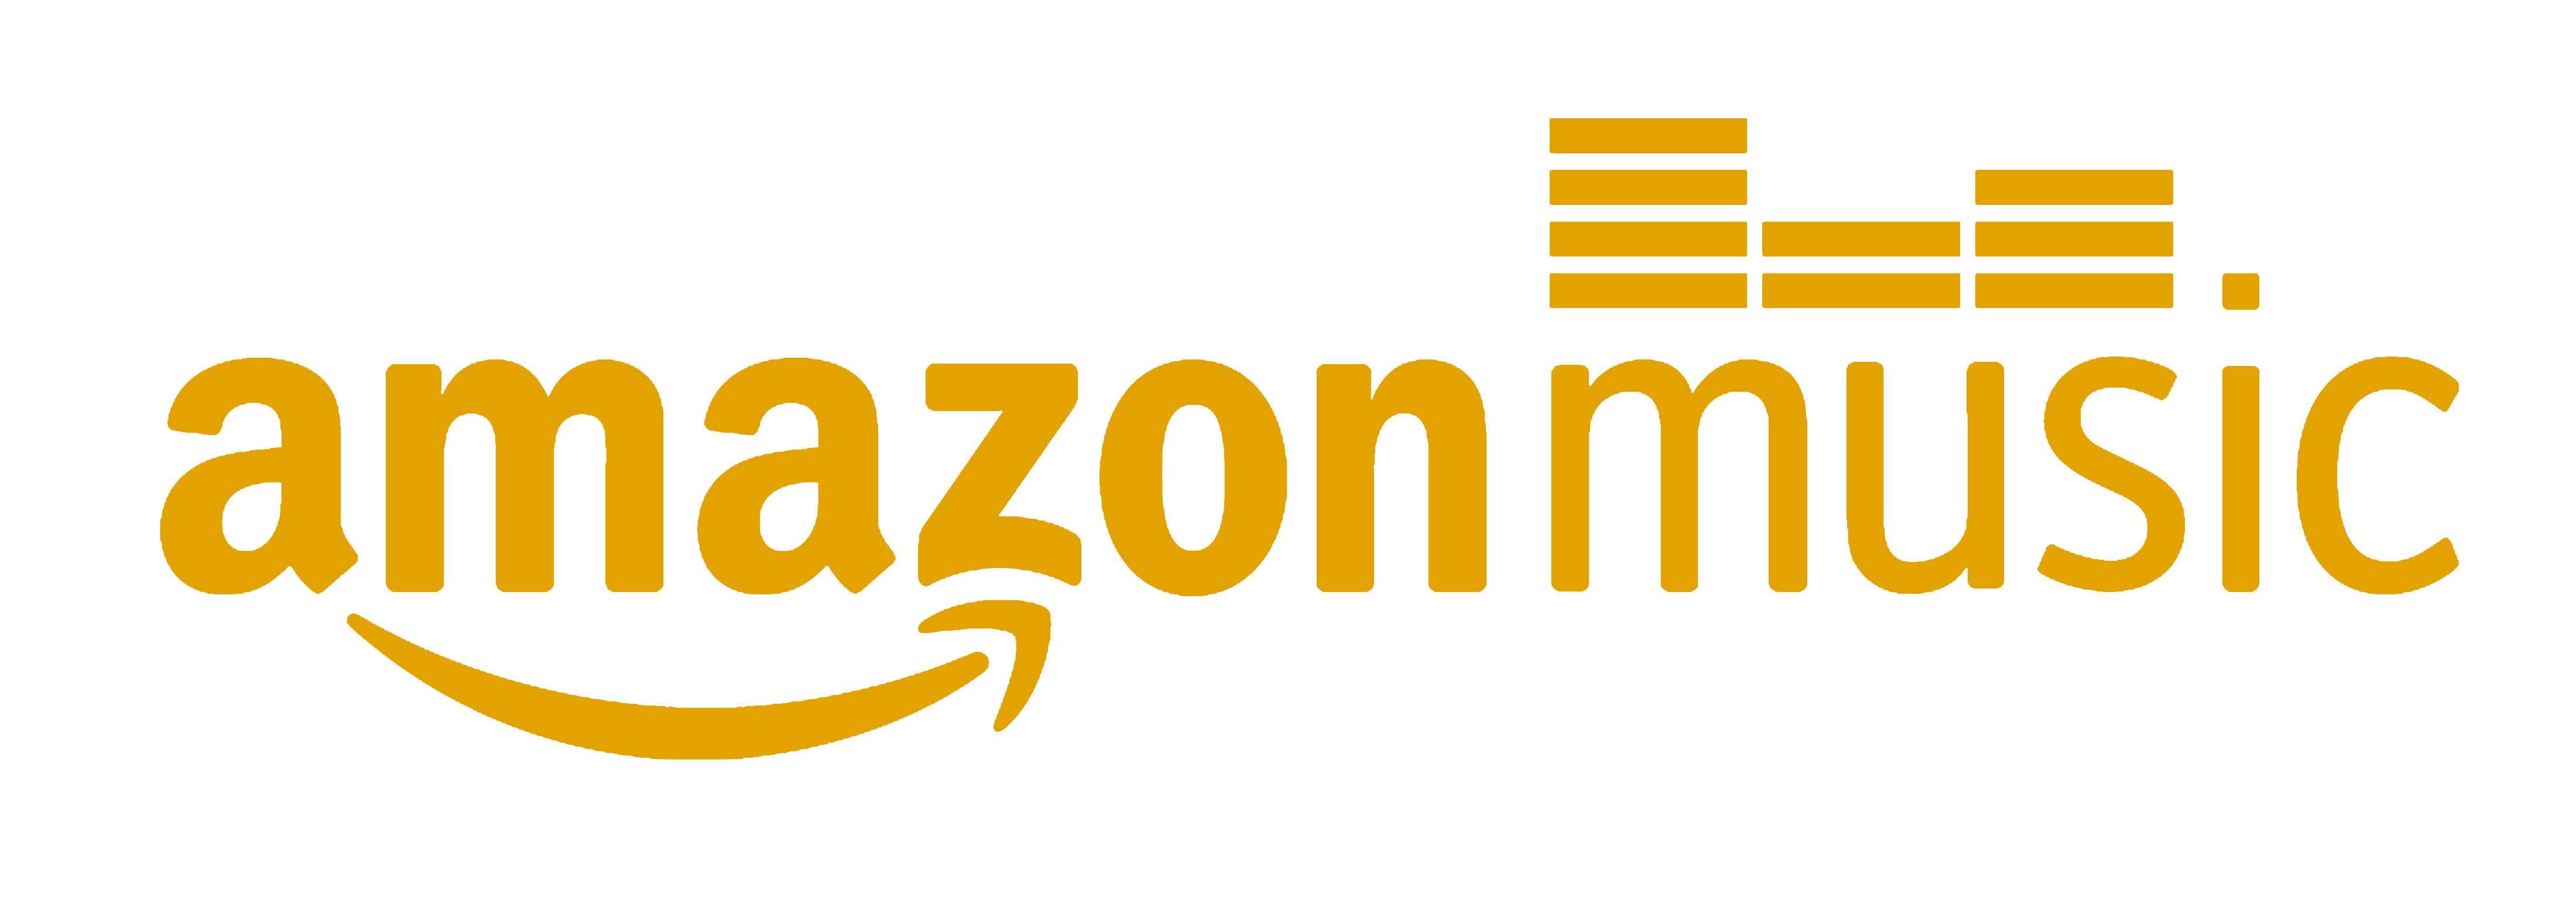 Amazon Music Logo - Amazon Music Logo Png